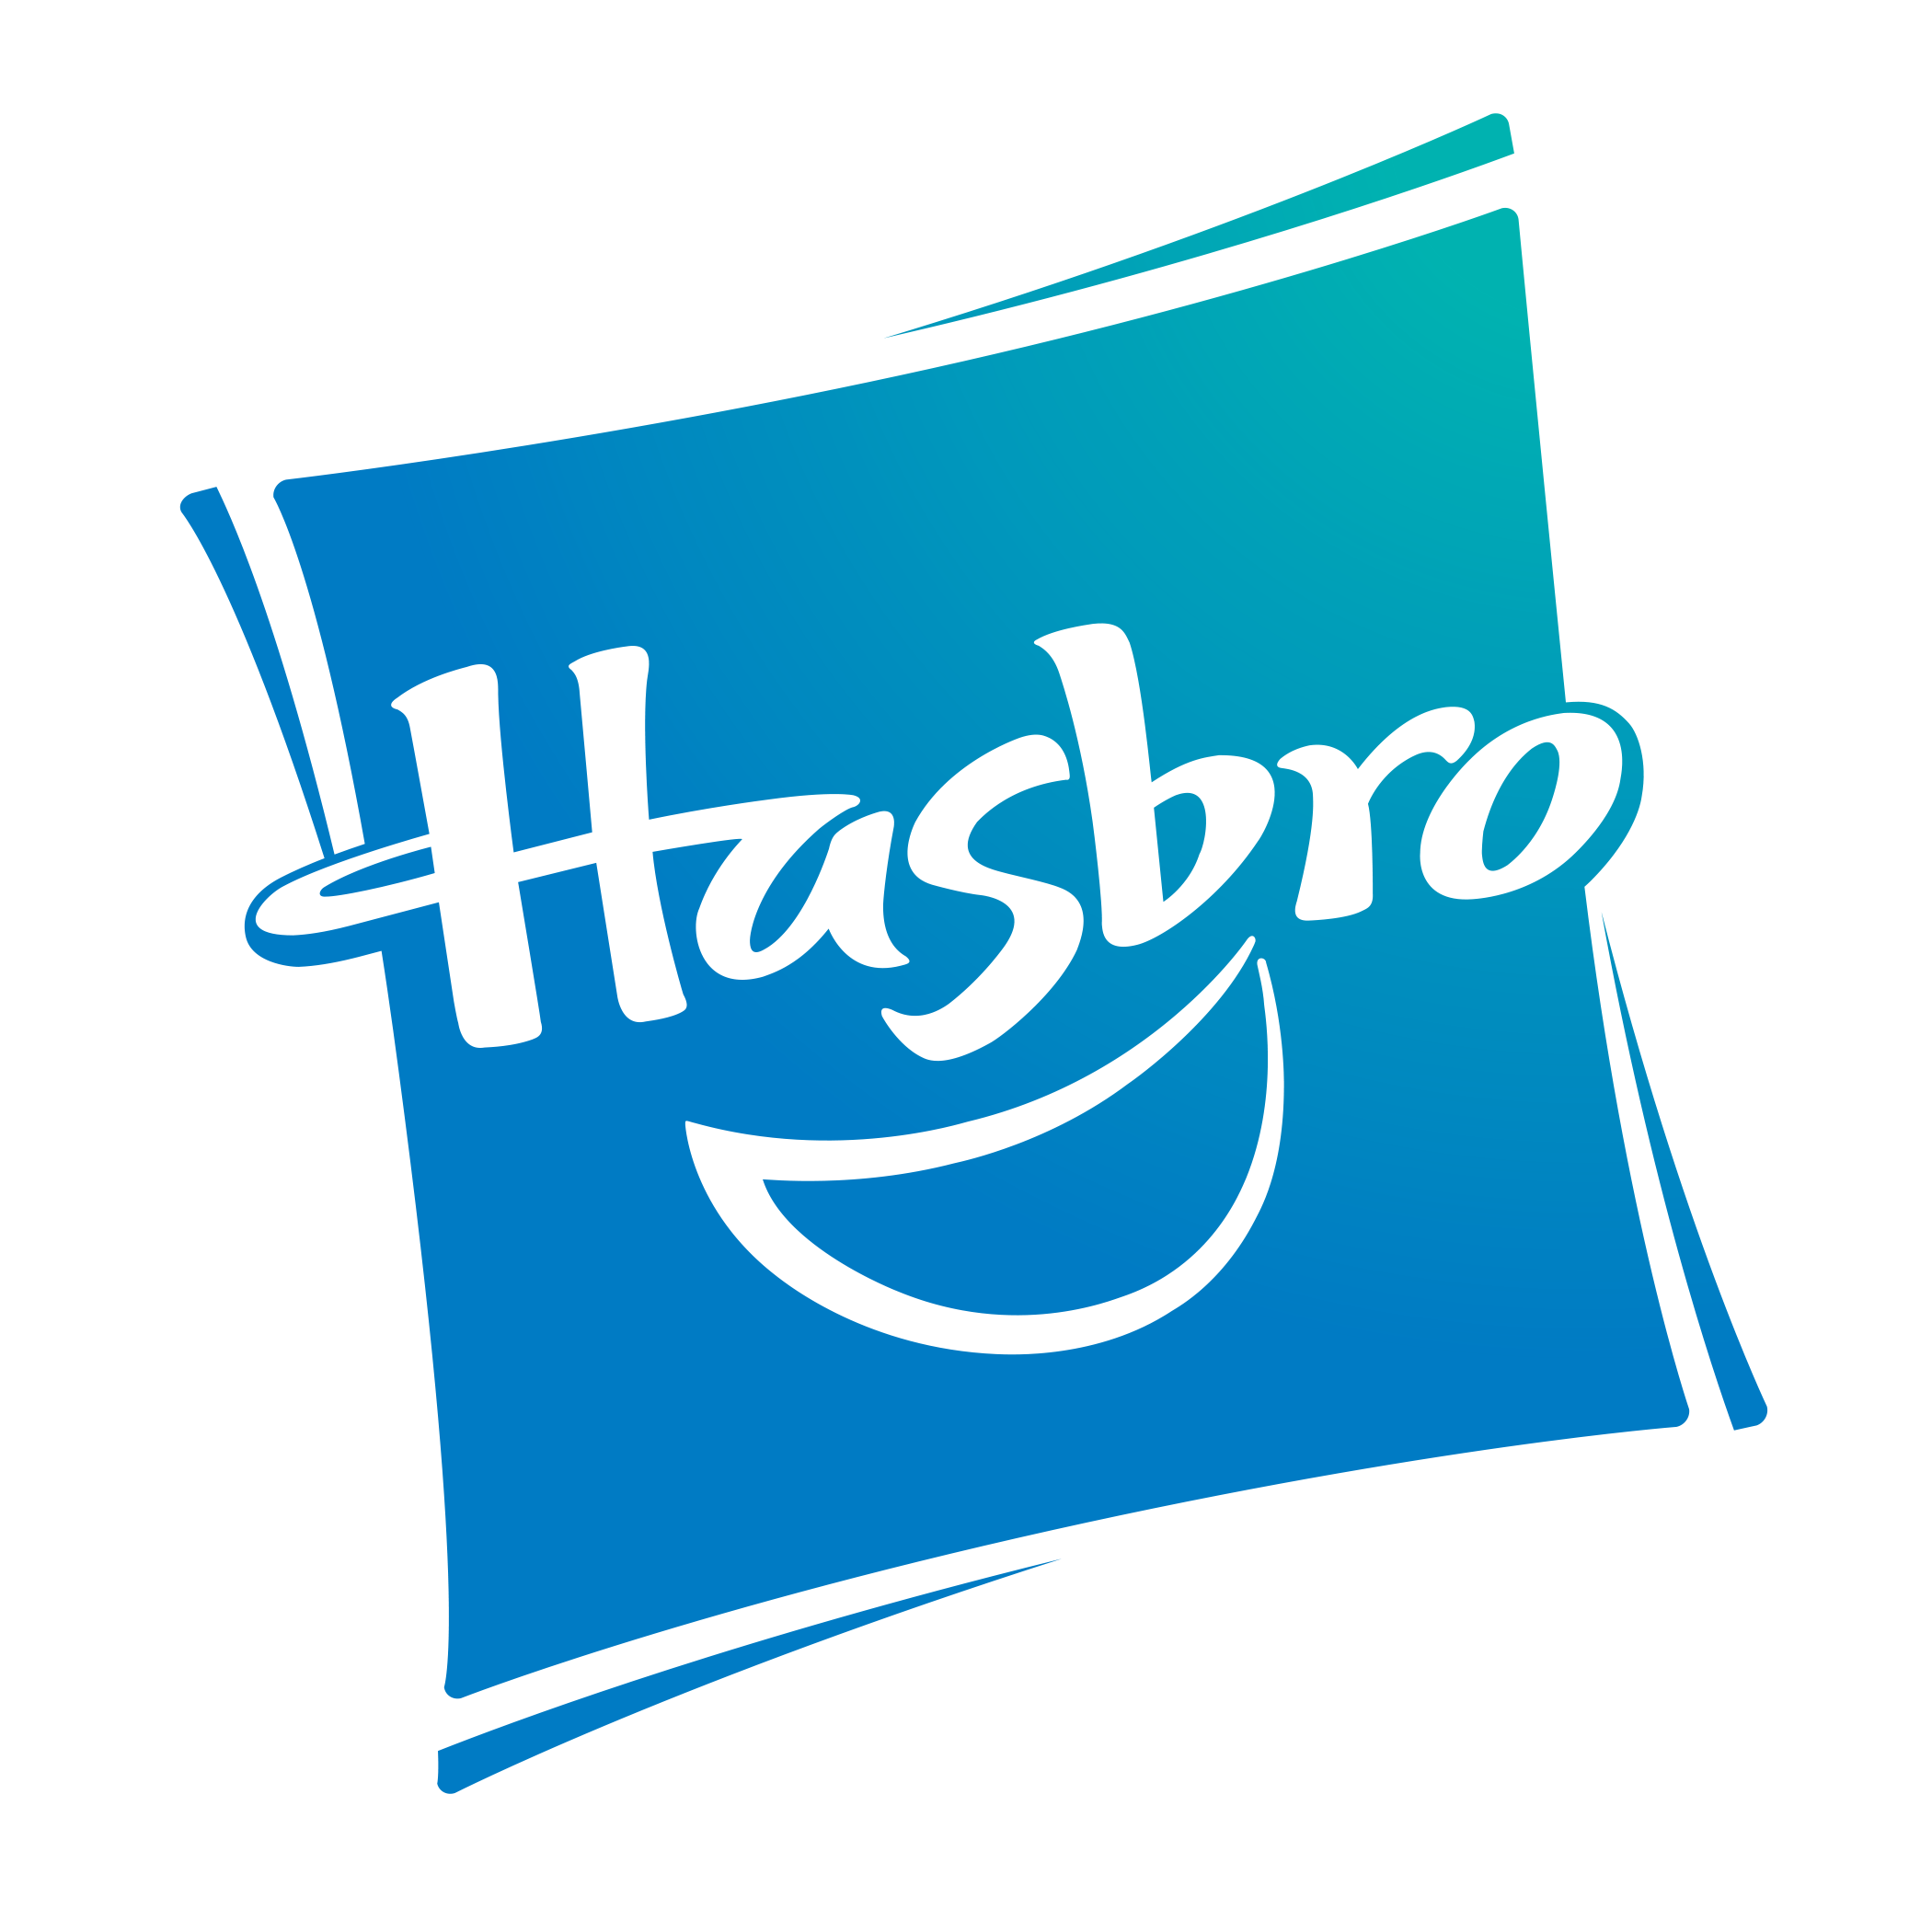 Hasbro_4c_noR-(1).png